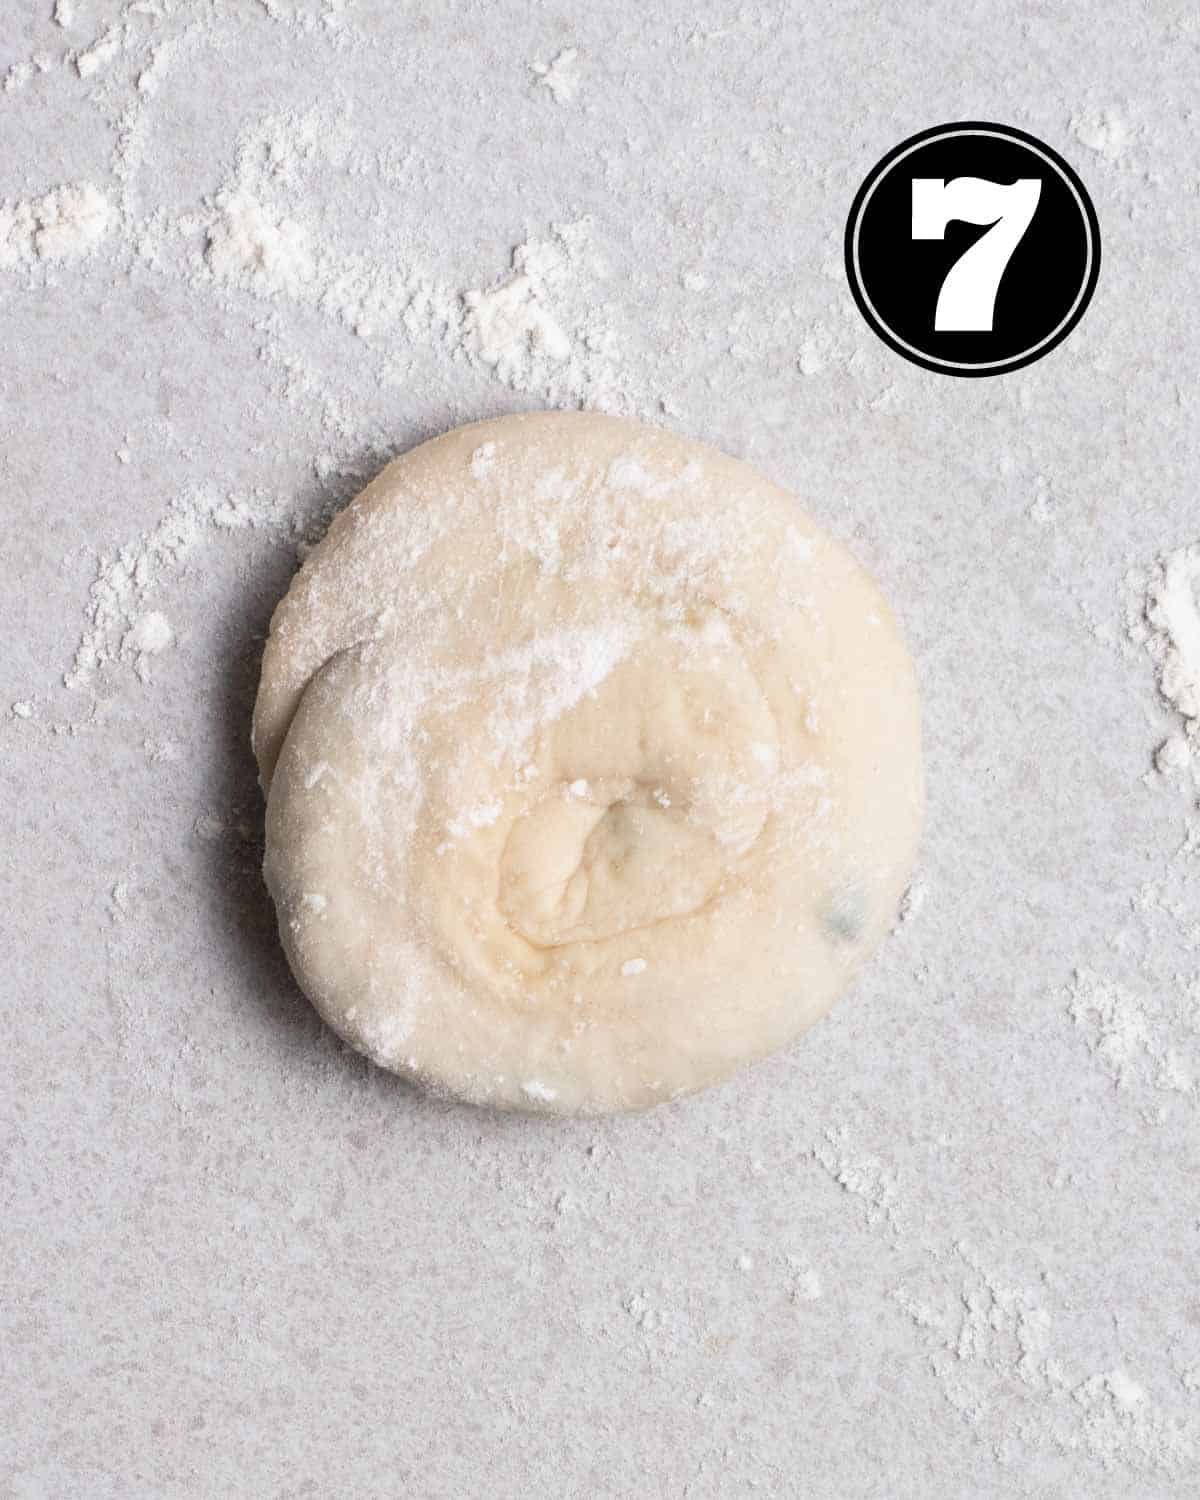 A slightly flatten scallion dough.